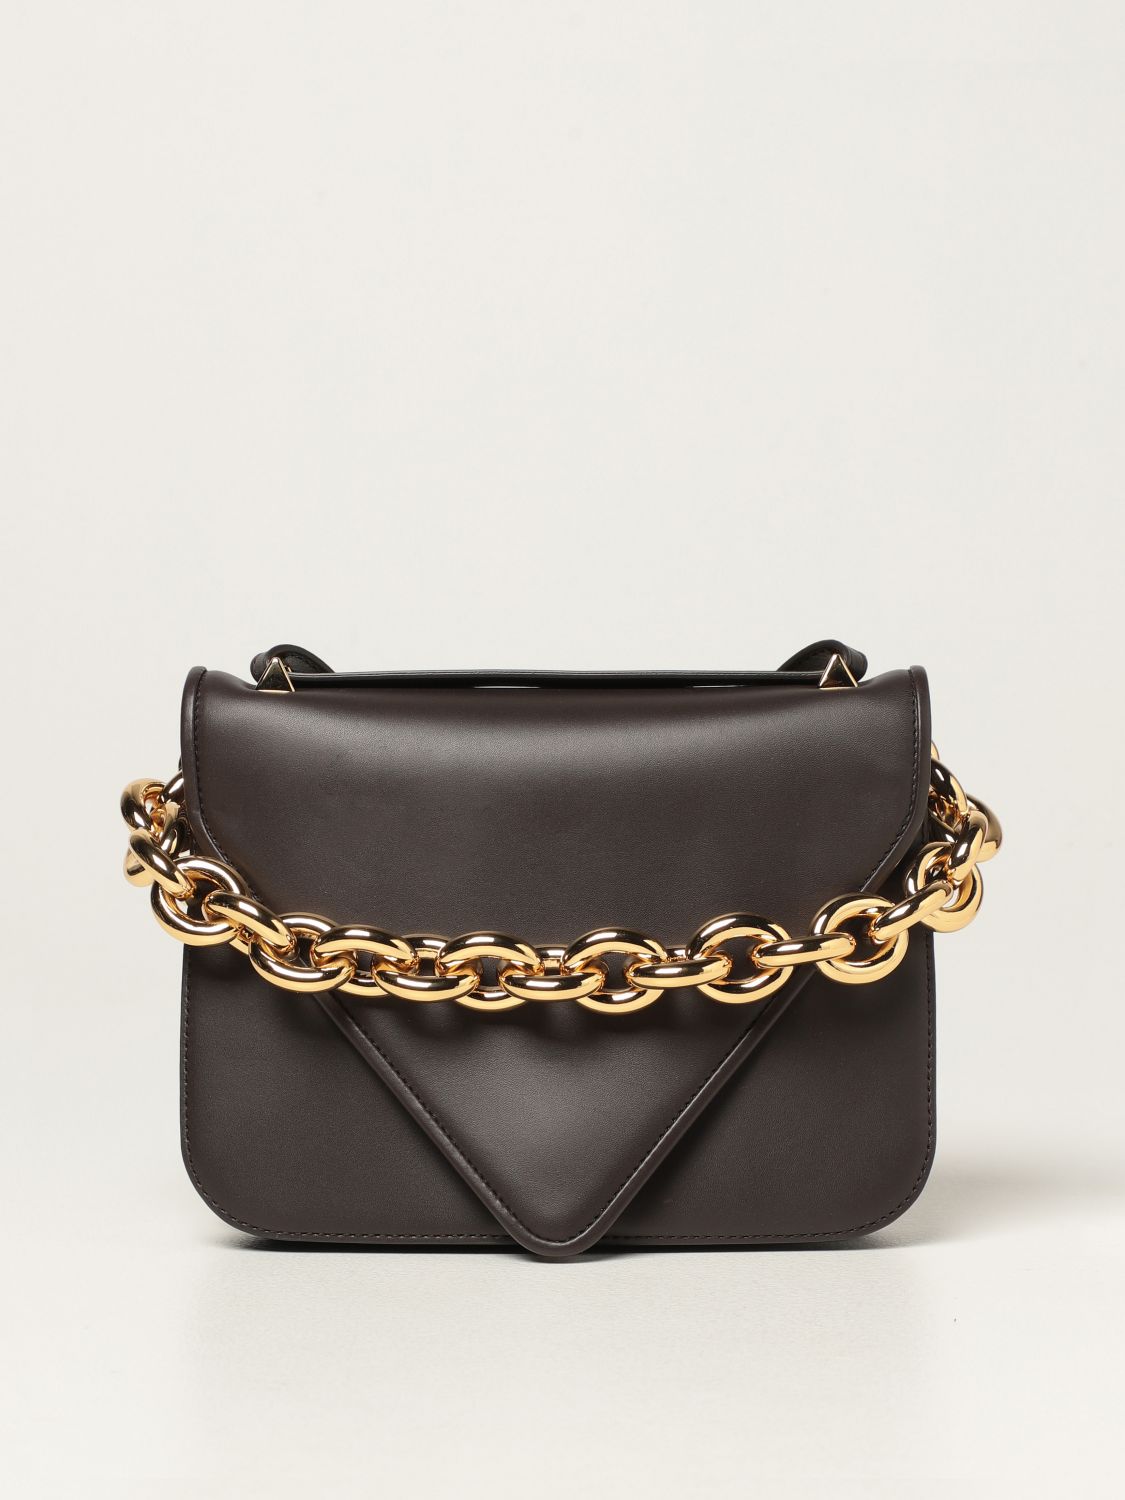 BOTTEGA VENETA: Mount bag in leather with chain detail - Dark | Bottega ...